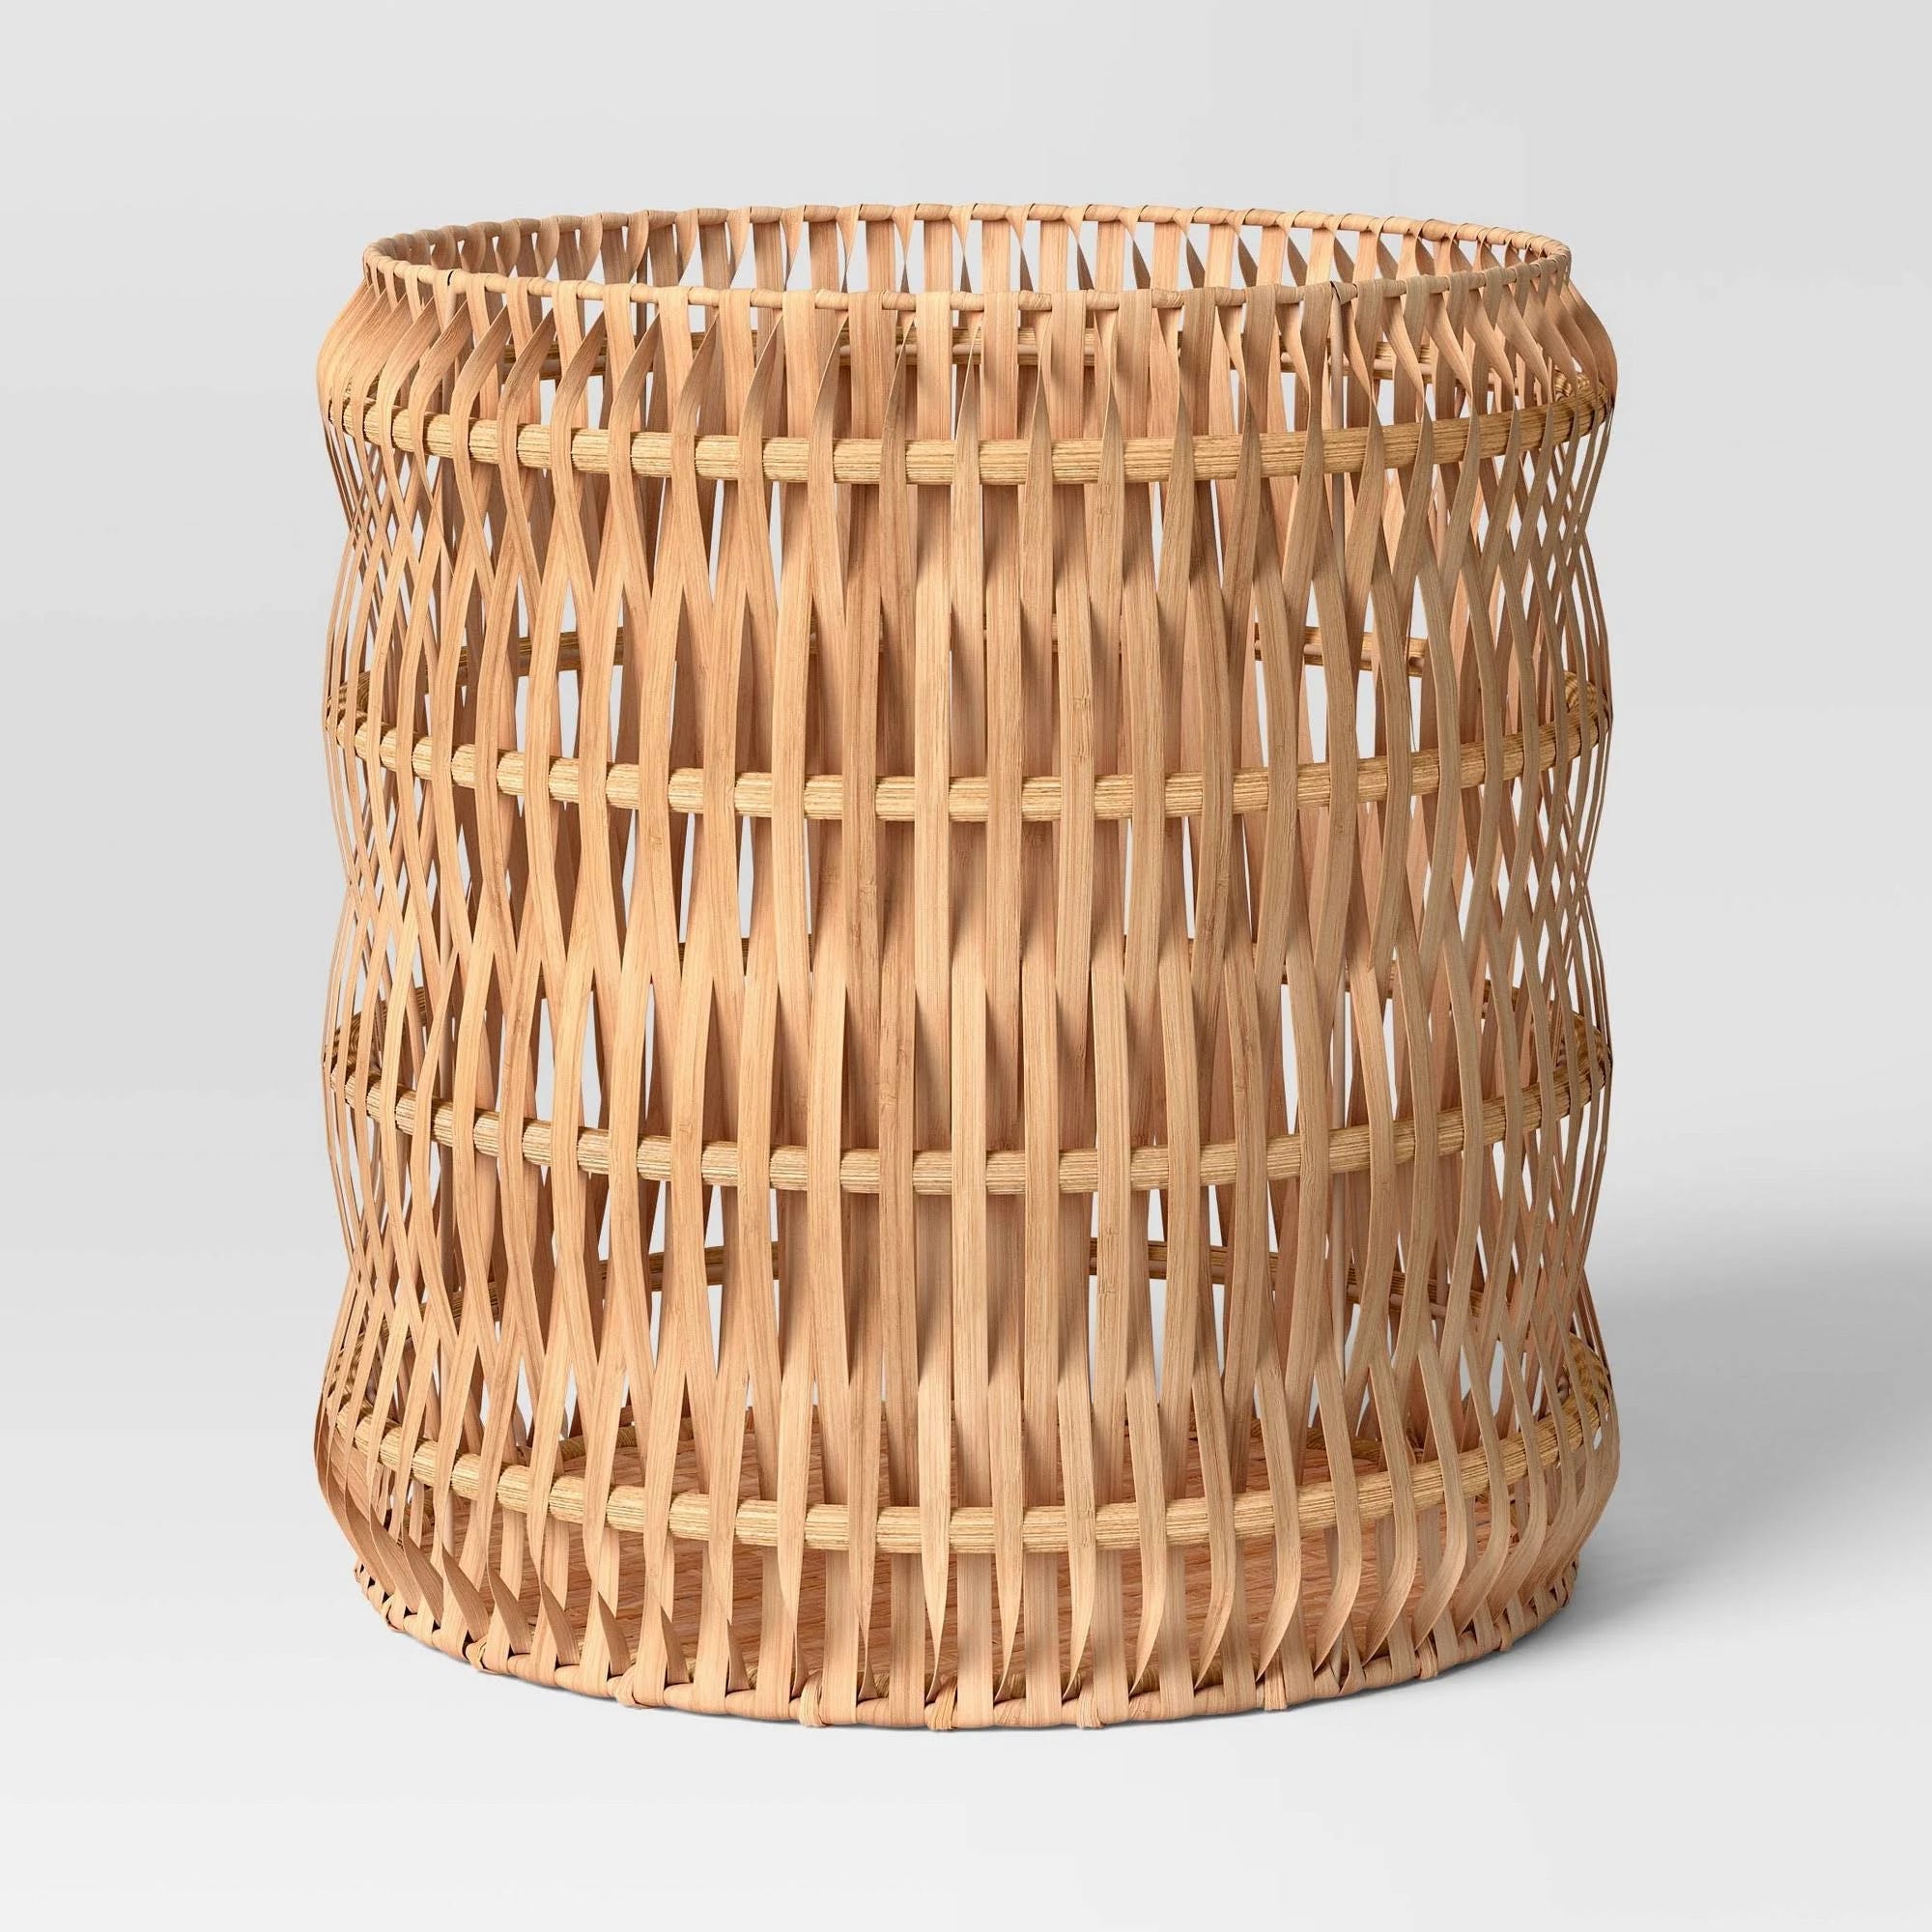 Rattan Round Basket for Home Decor | Image